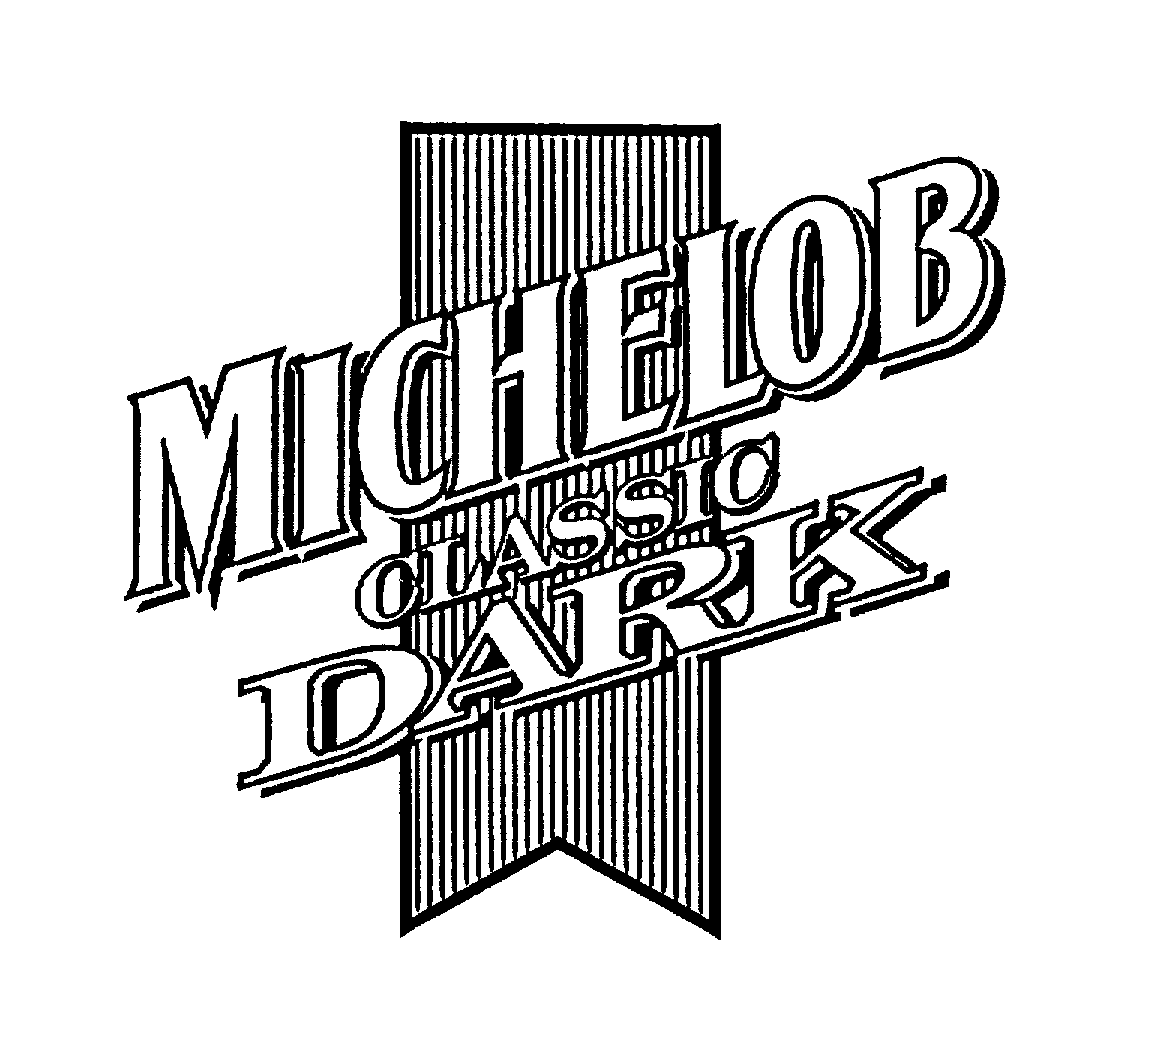  MICHELOB CLASSIC DARK